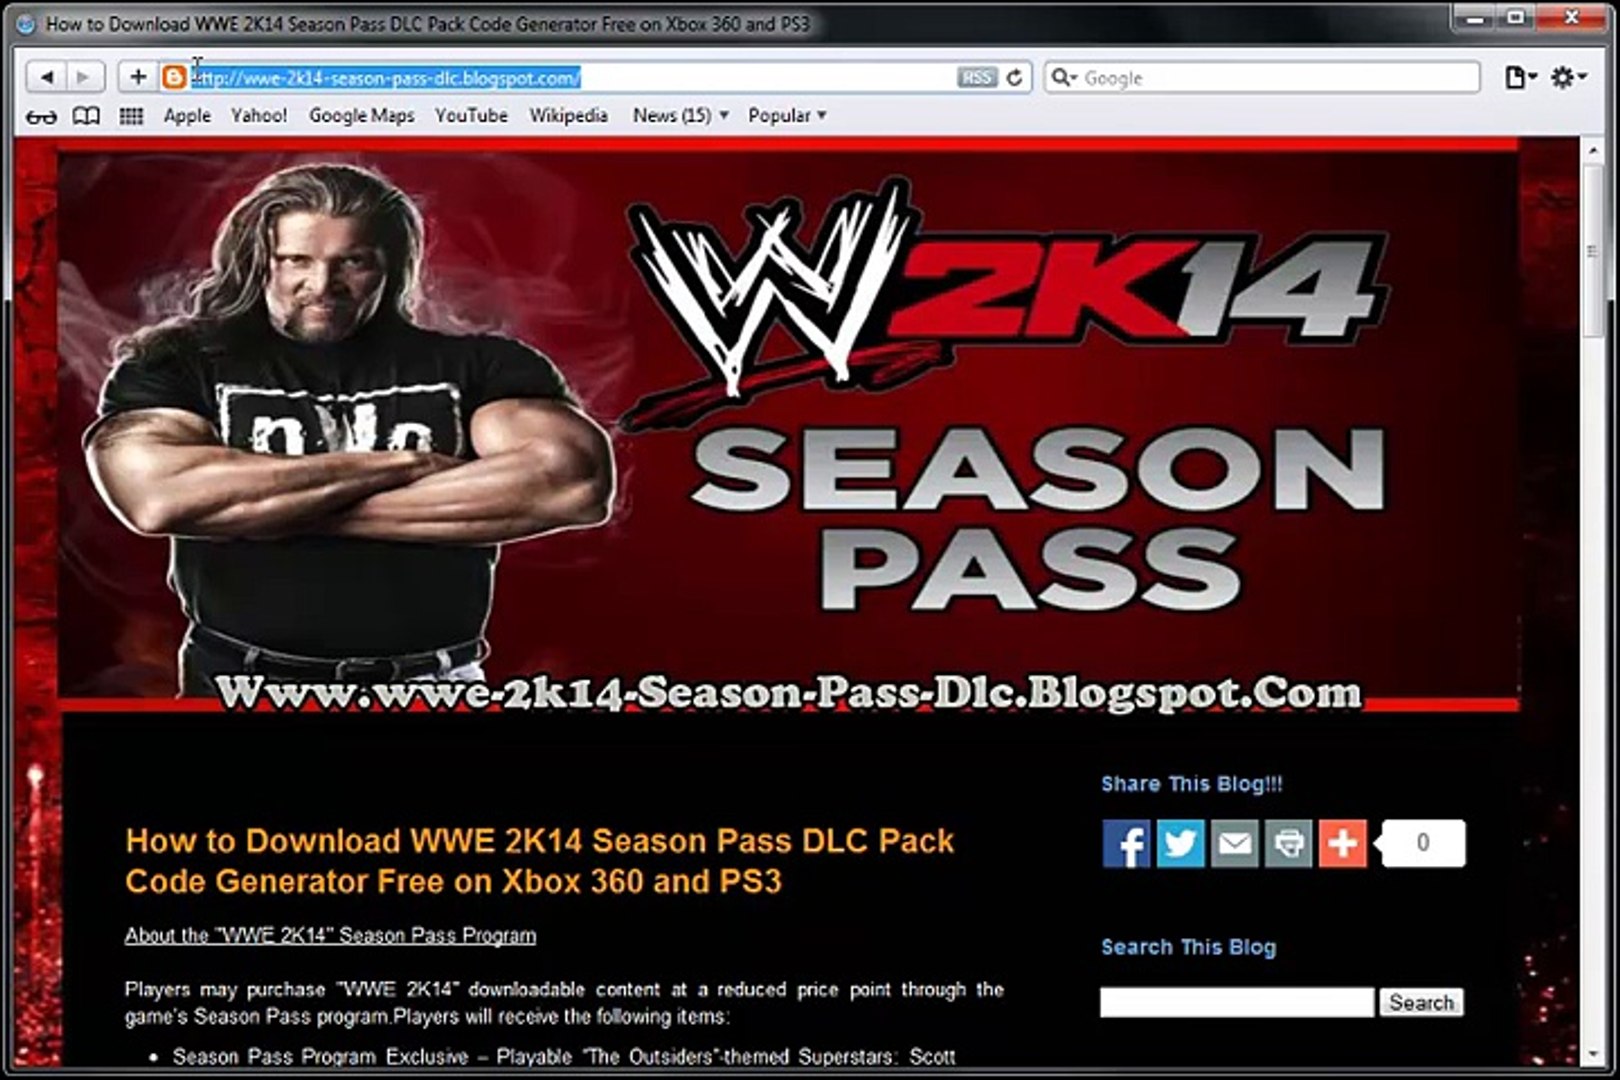 Get Free WWE 2K14 Season Pass DLC Pack Redeem Codes - Xbox 360 / PS3  Updated 2015 - video Dailymotion